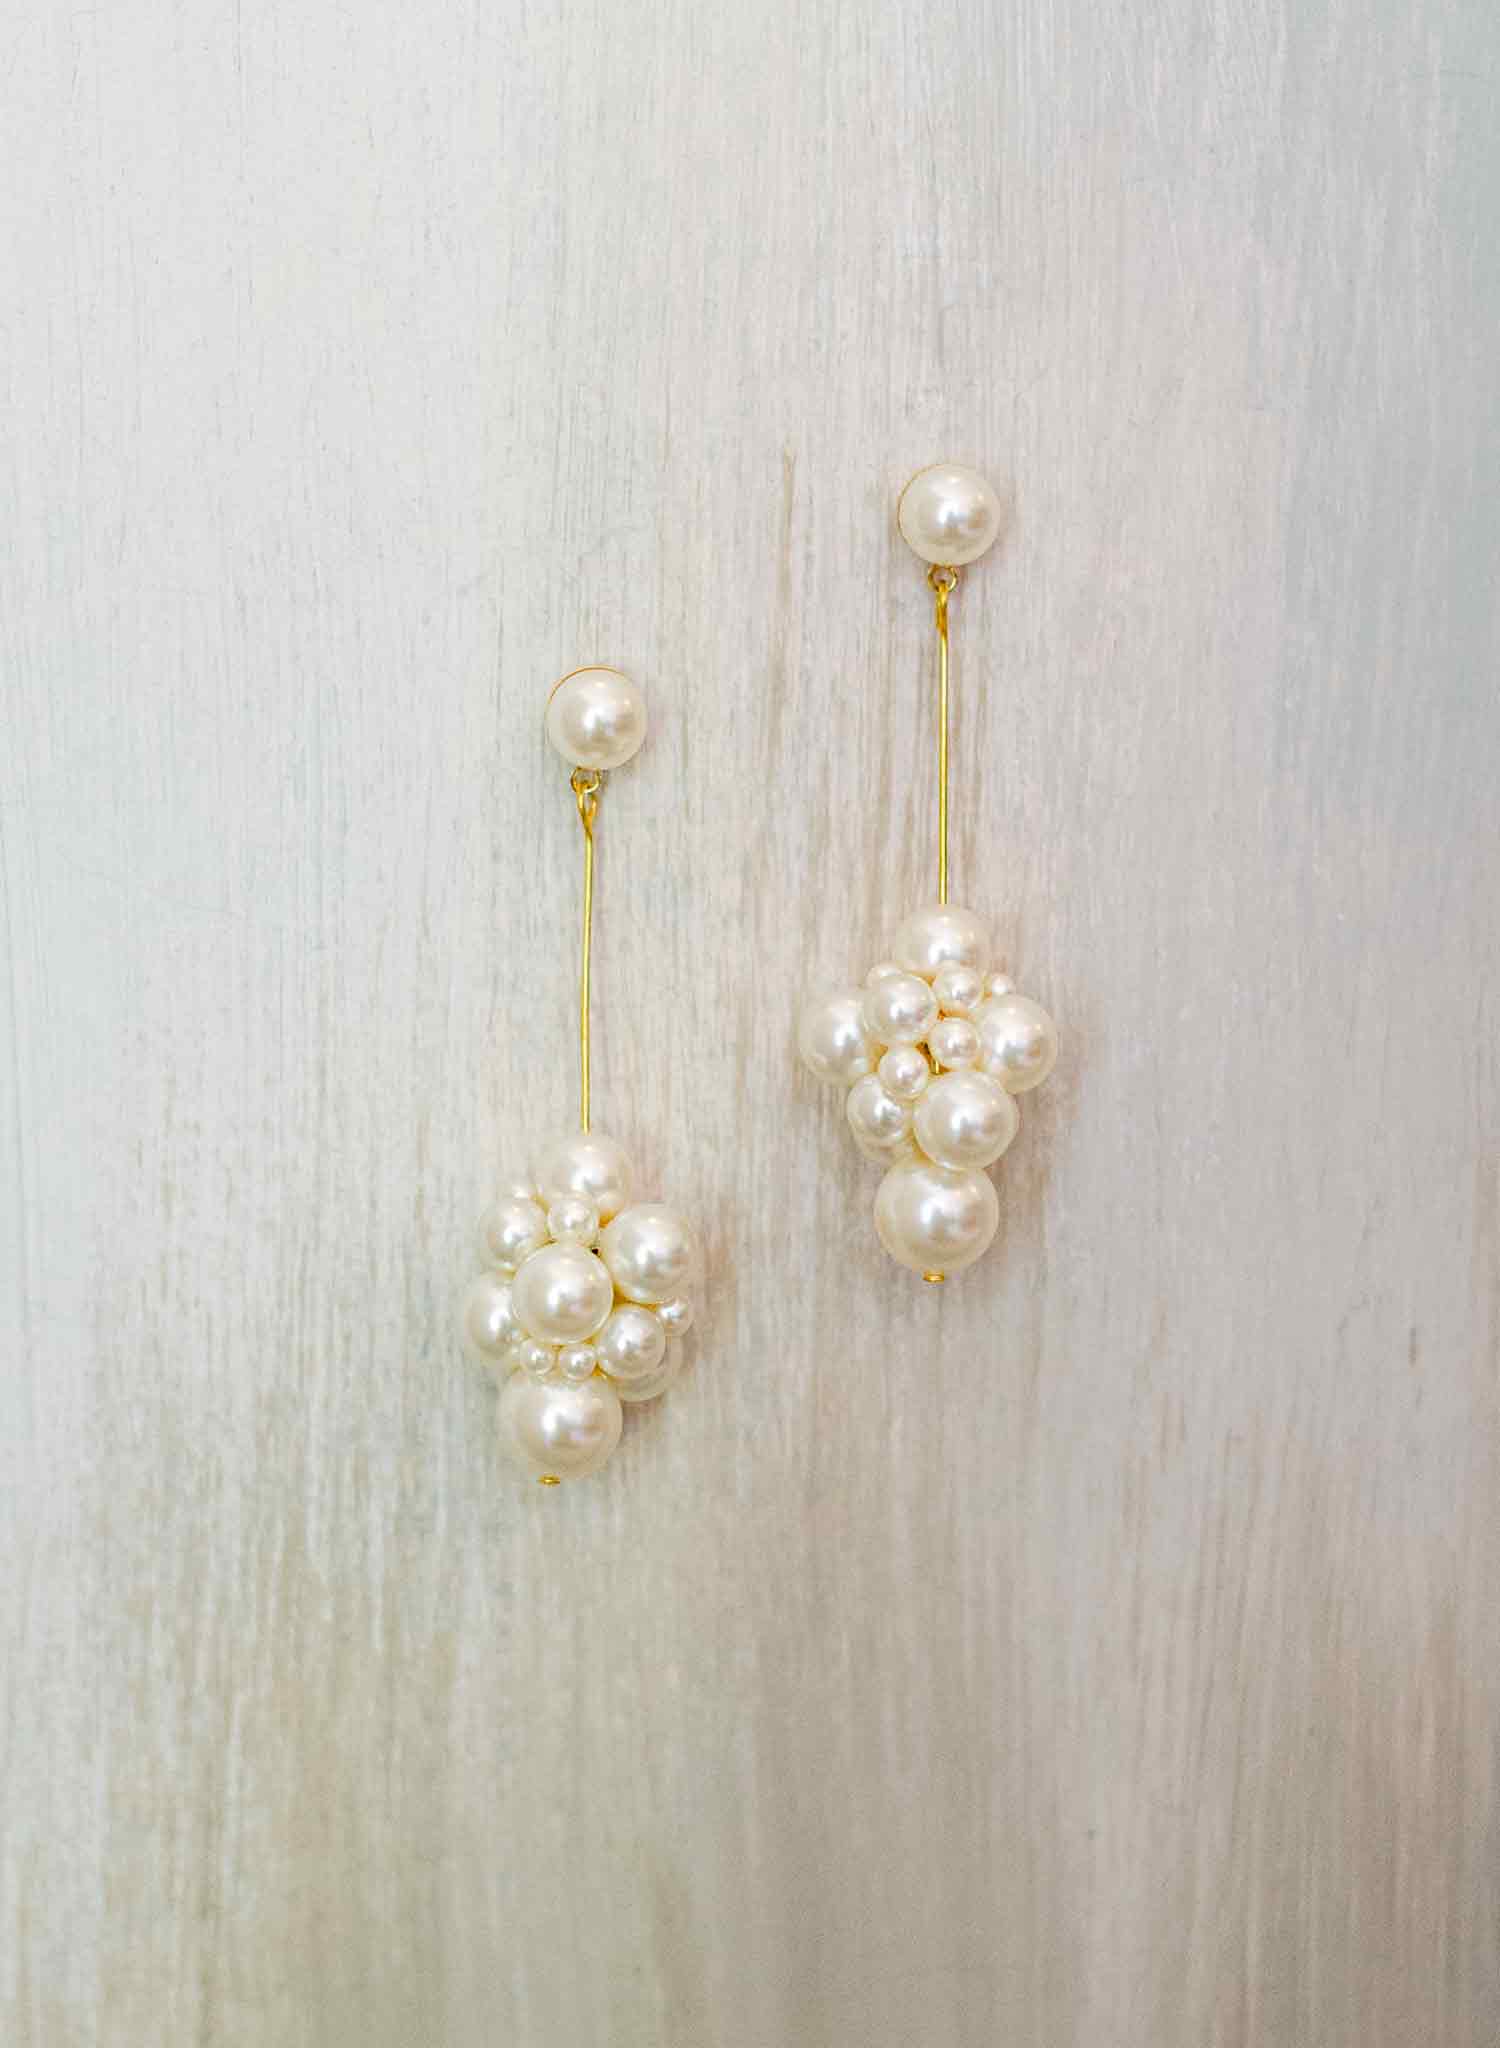 2022 New Cute Pearl Studs Hoop Earrings for Women Gold Color Eardrop  Minimalist Tiny Huggies Hoops Wedding Fashion Jewelry